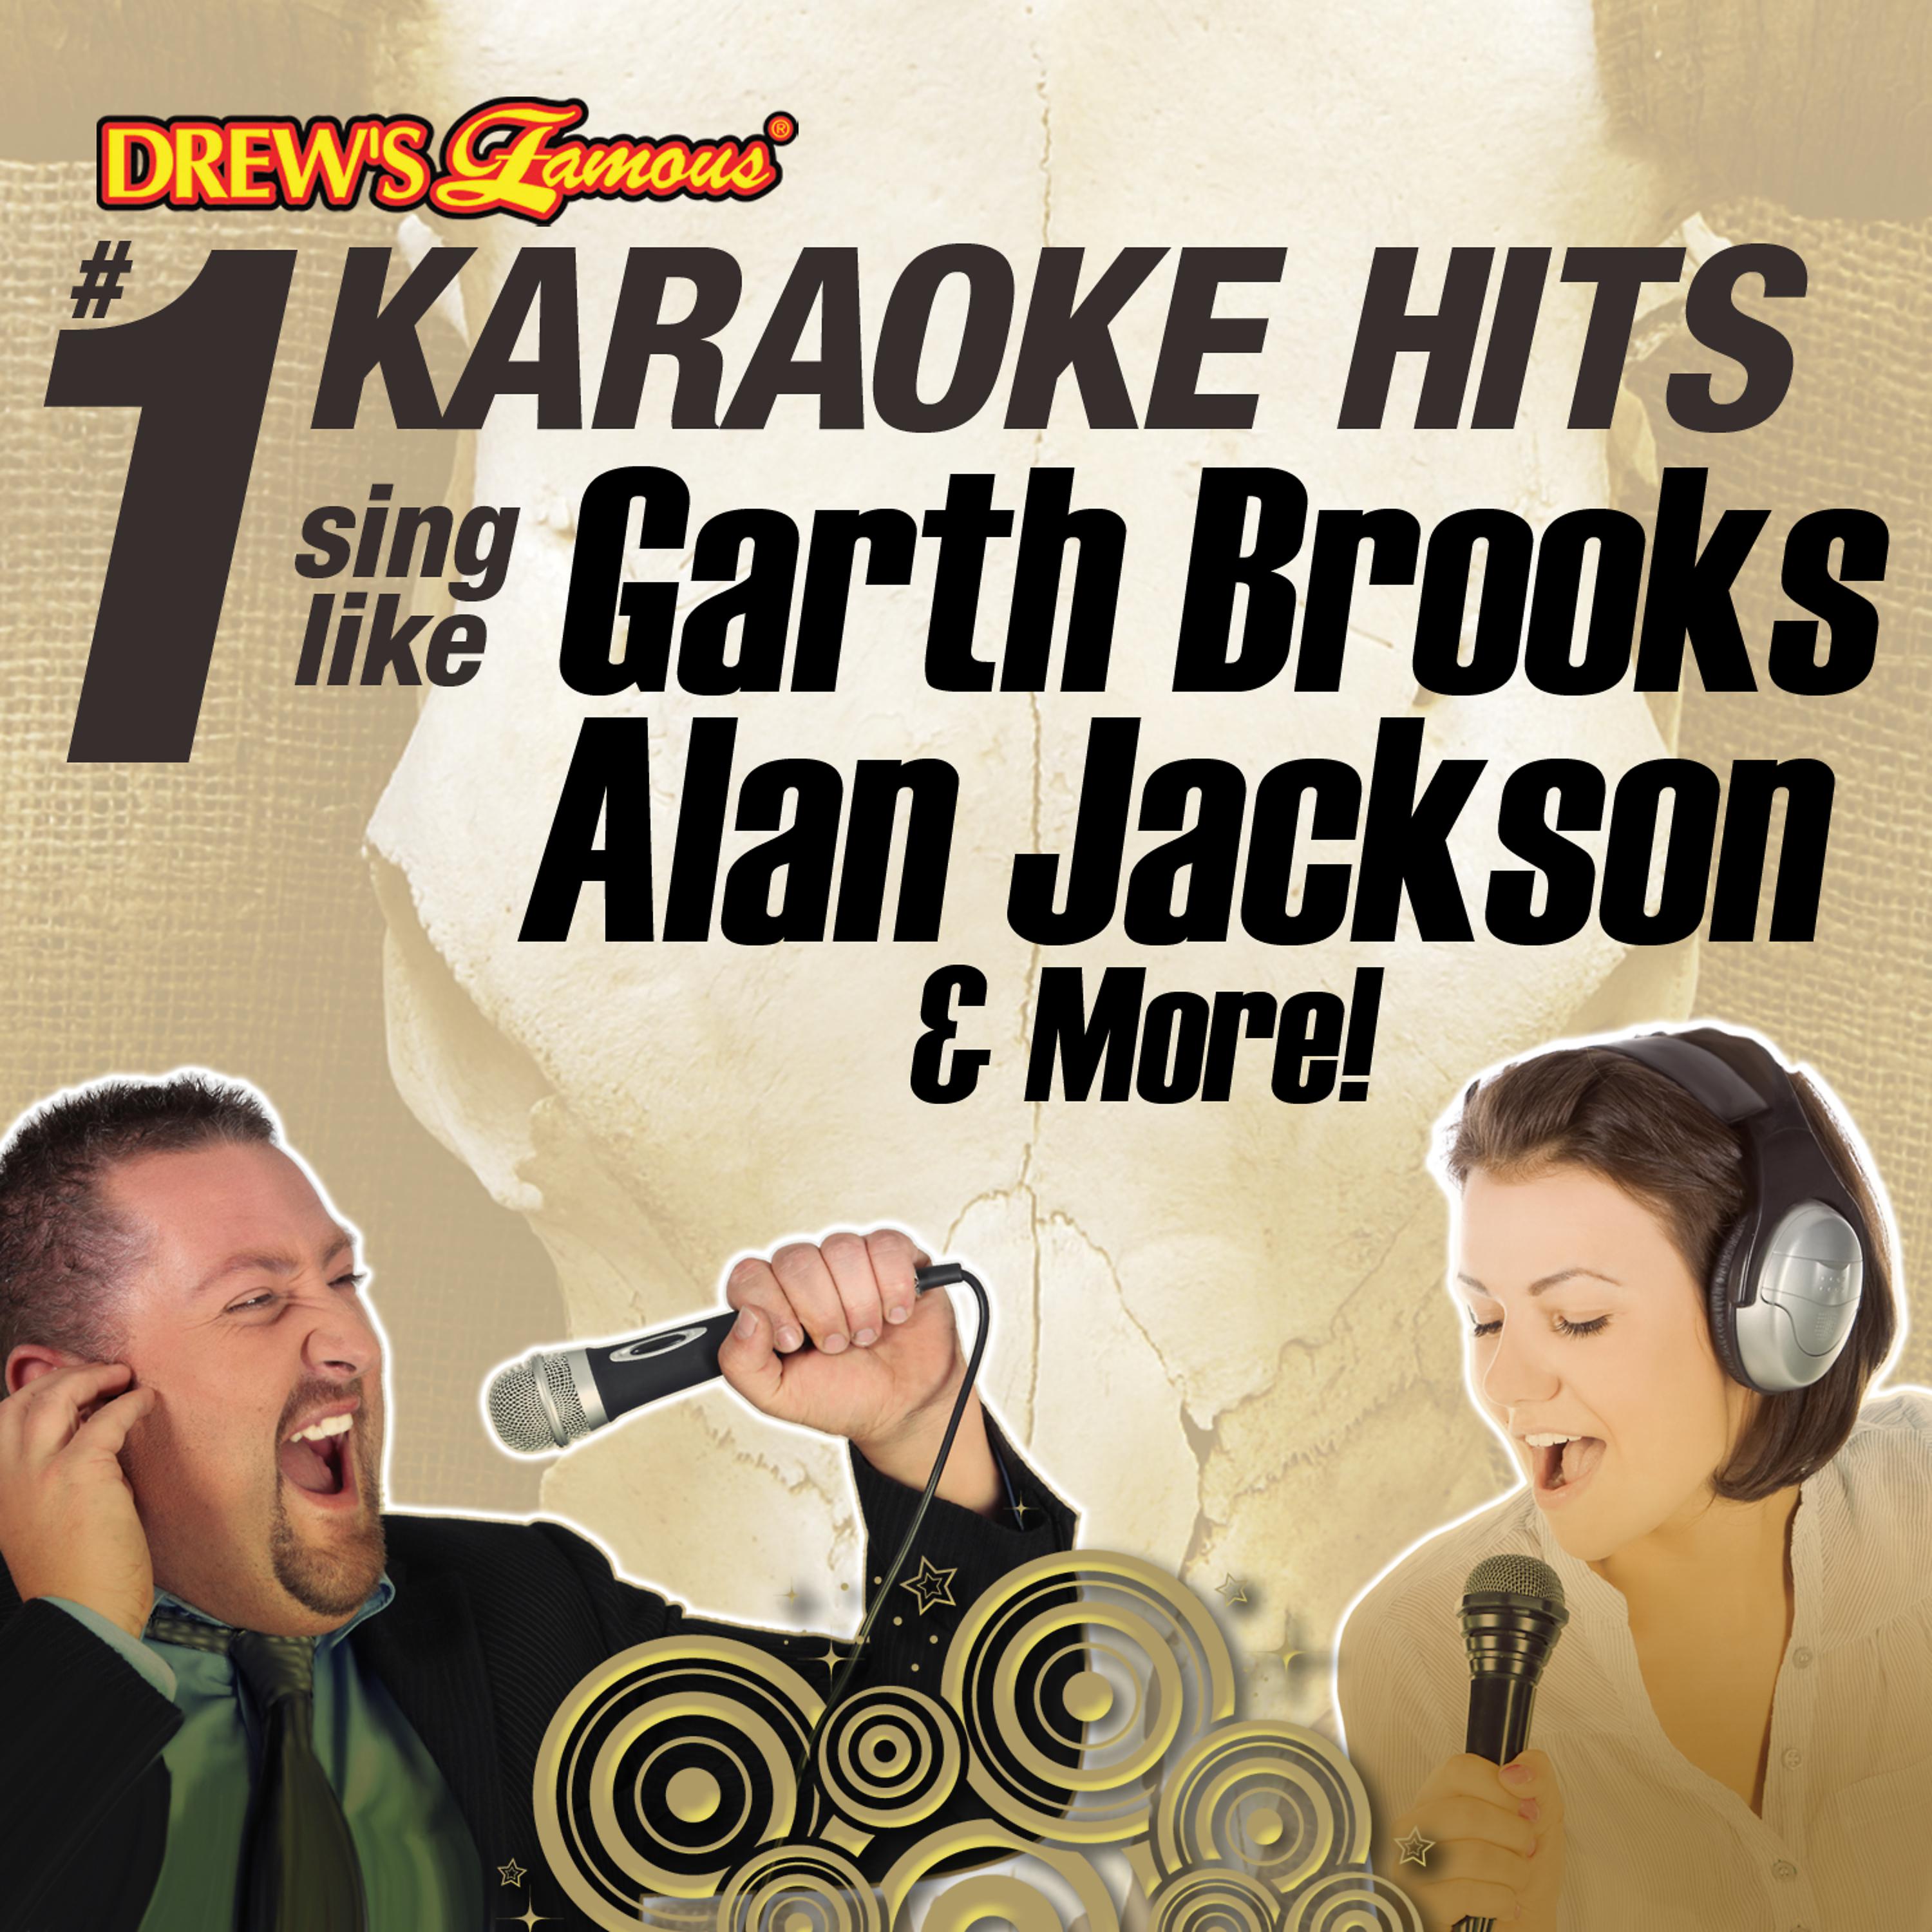 Постер альбома Drew's Famous #1 Karaoke Hits: Sing like Garth Brooks, Alan Jackson & More!